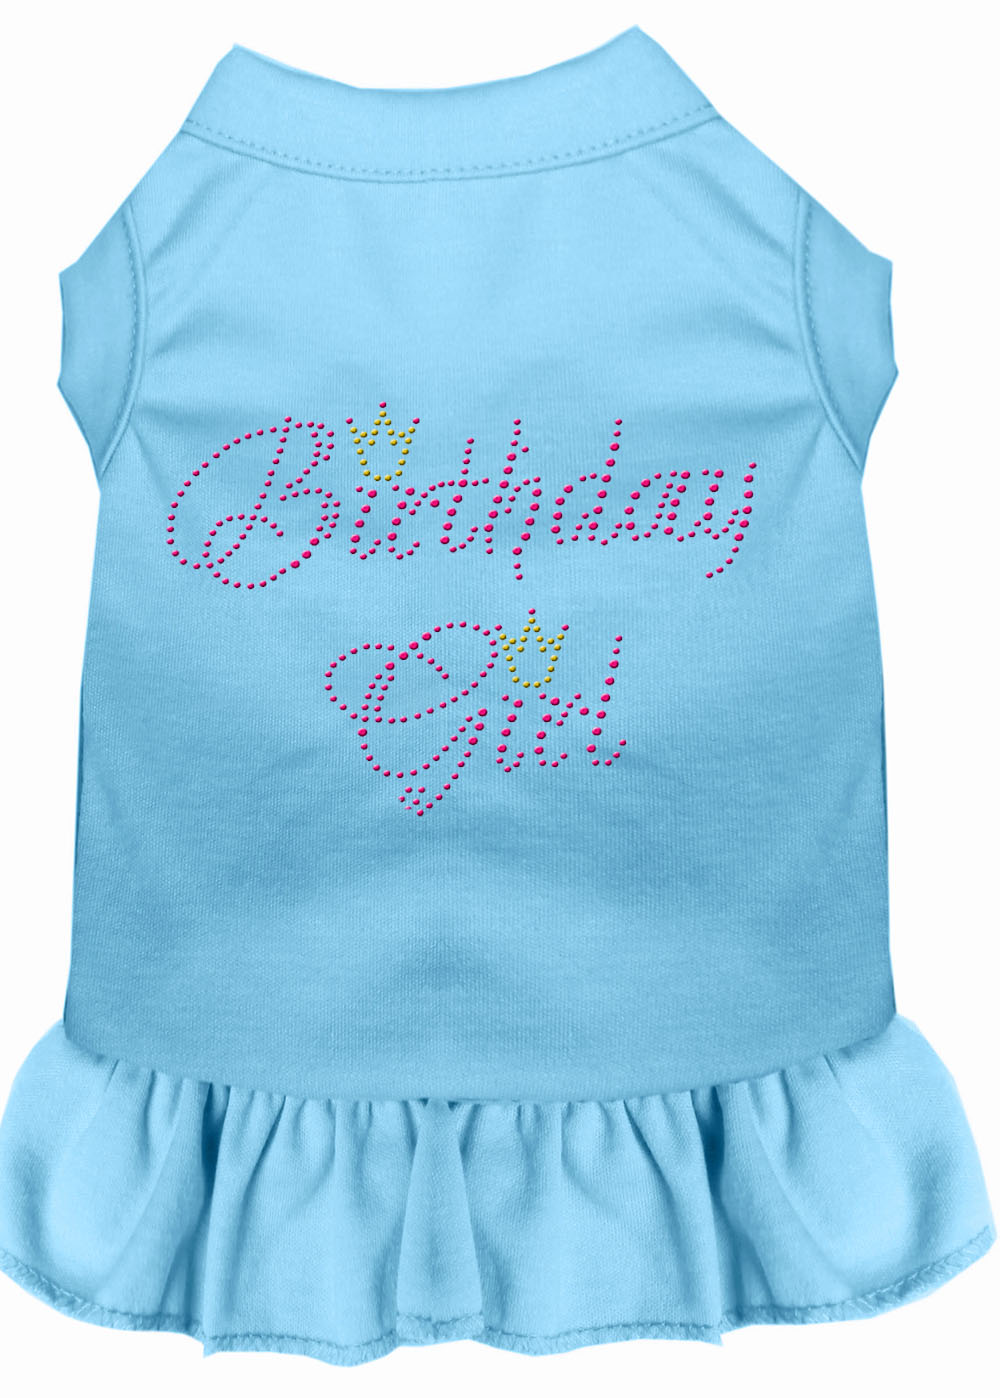 Birthday Girl Rhinestone Dress Baby Blue Lg